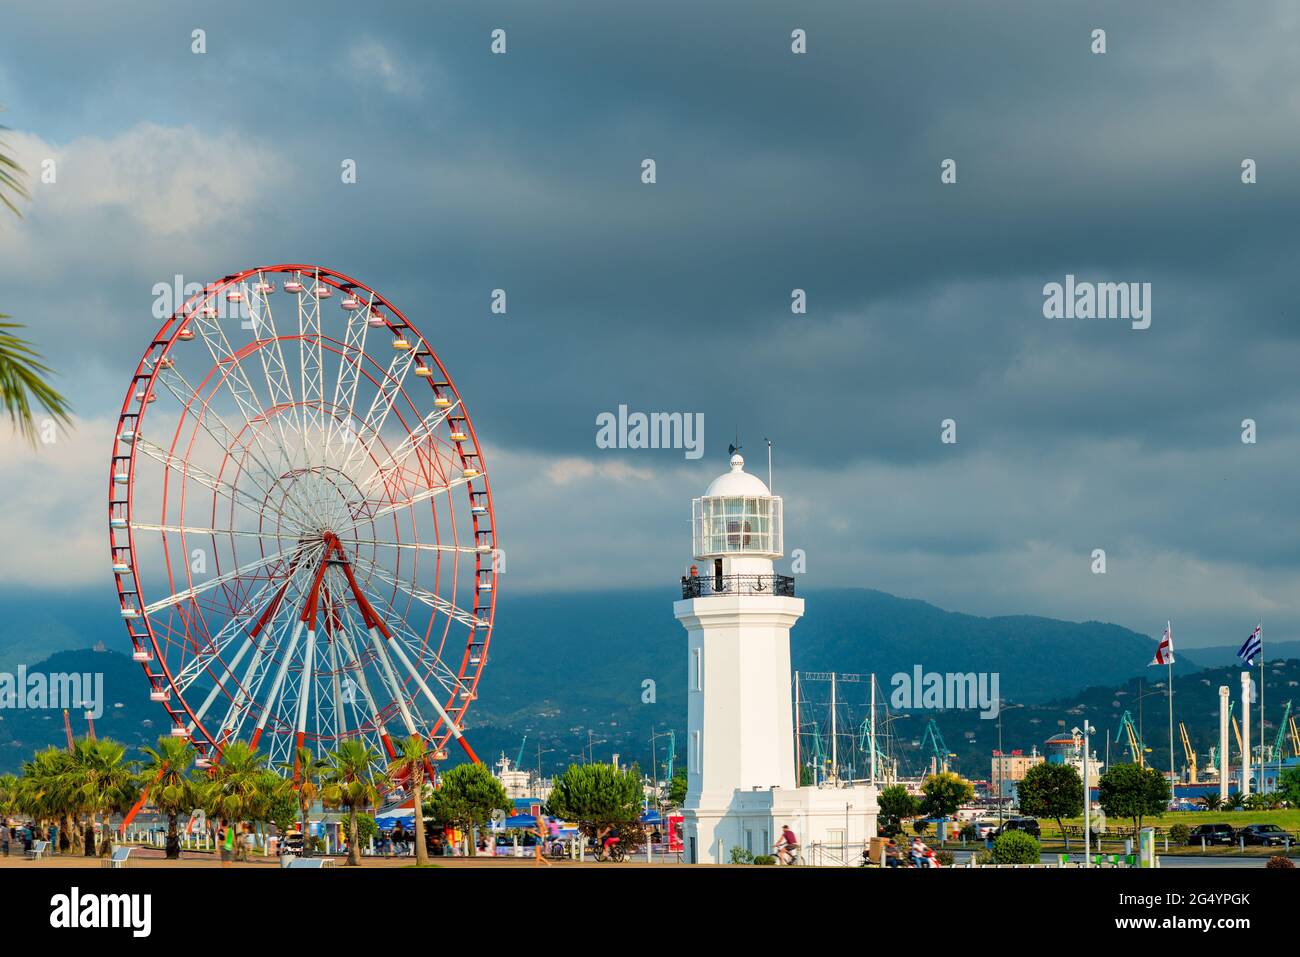 View of the ferris wheel on the Batumi embankment Stock Photo